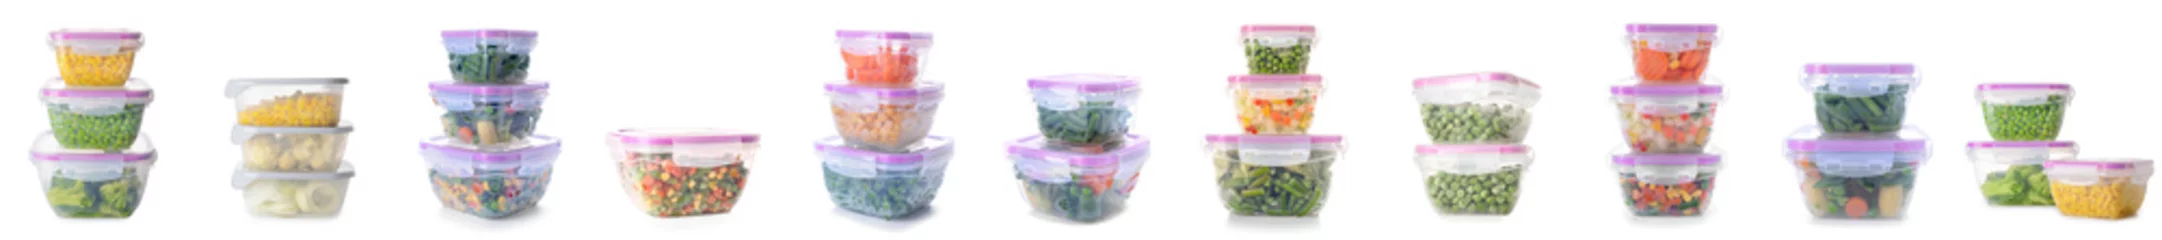 Lichtdoorlatende rolgordijnen Verse groenten Collage of plastic containers with fresh vegetables isolated on white